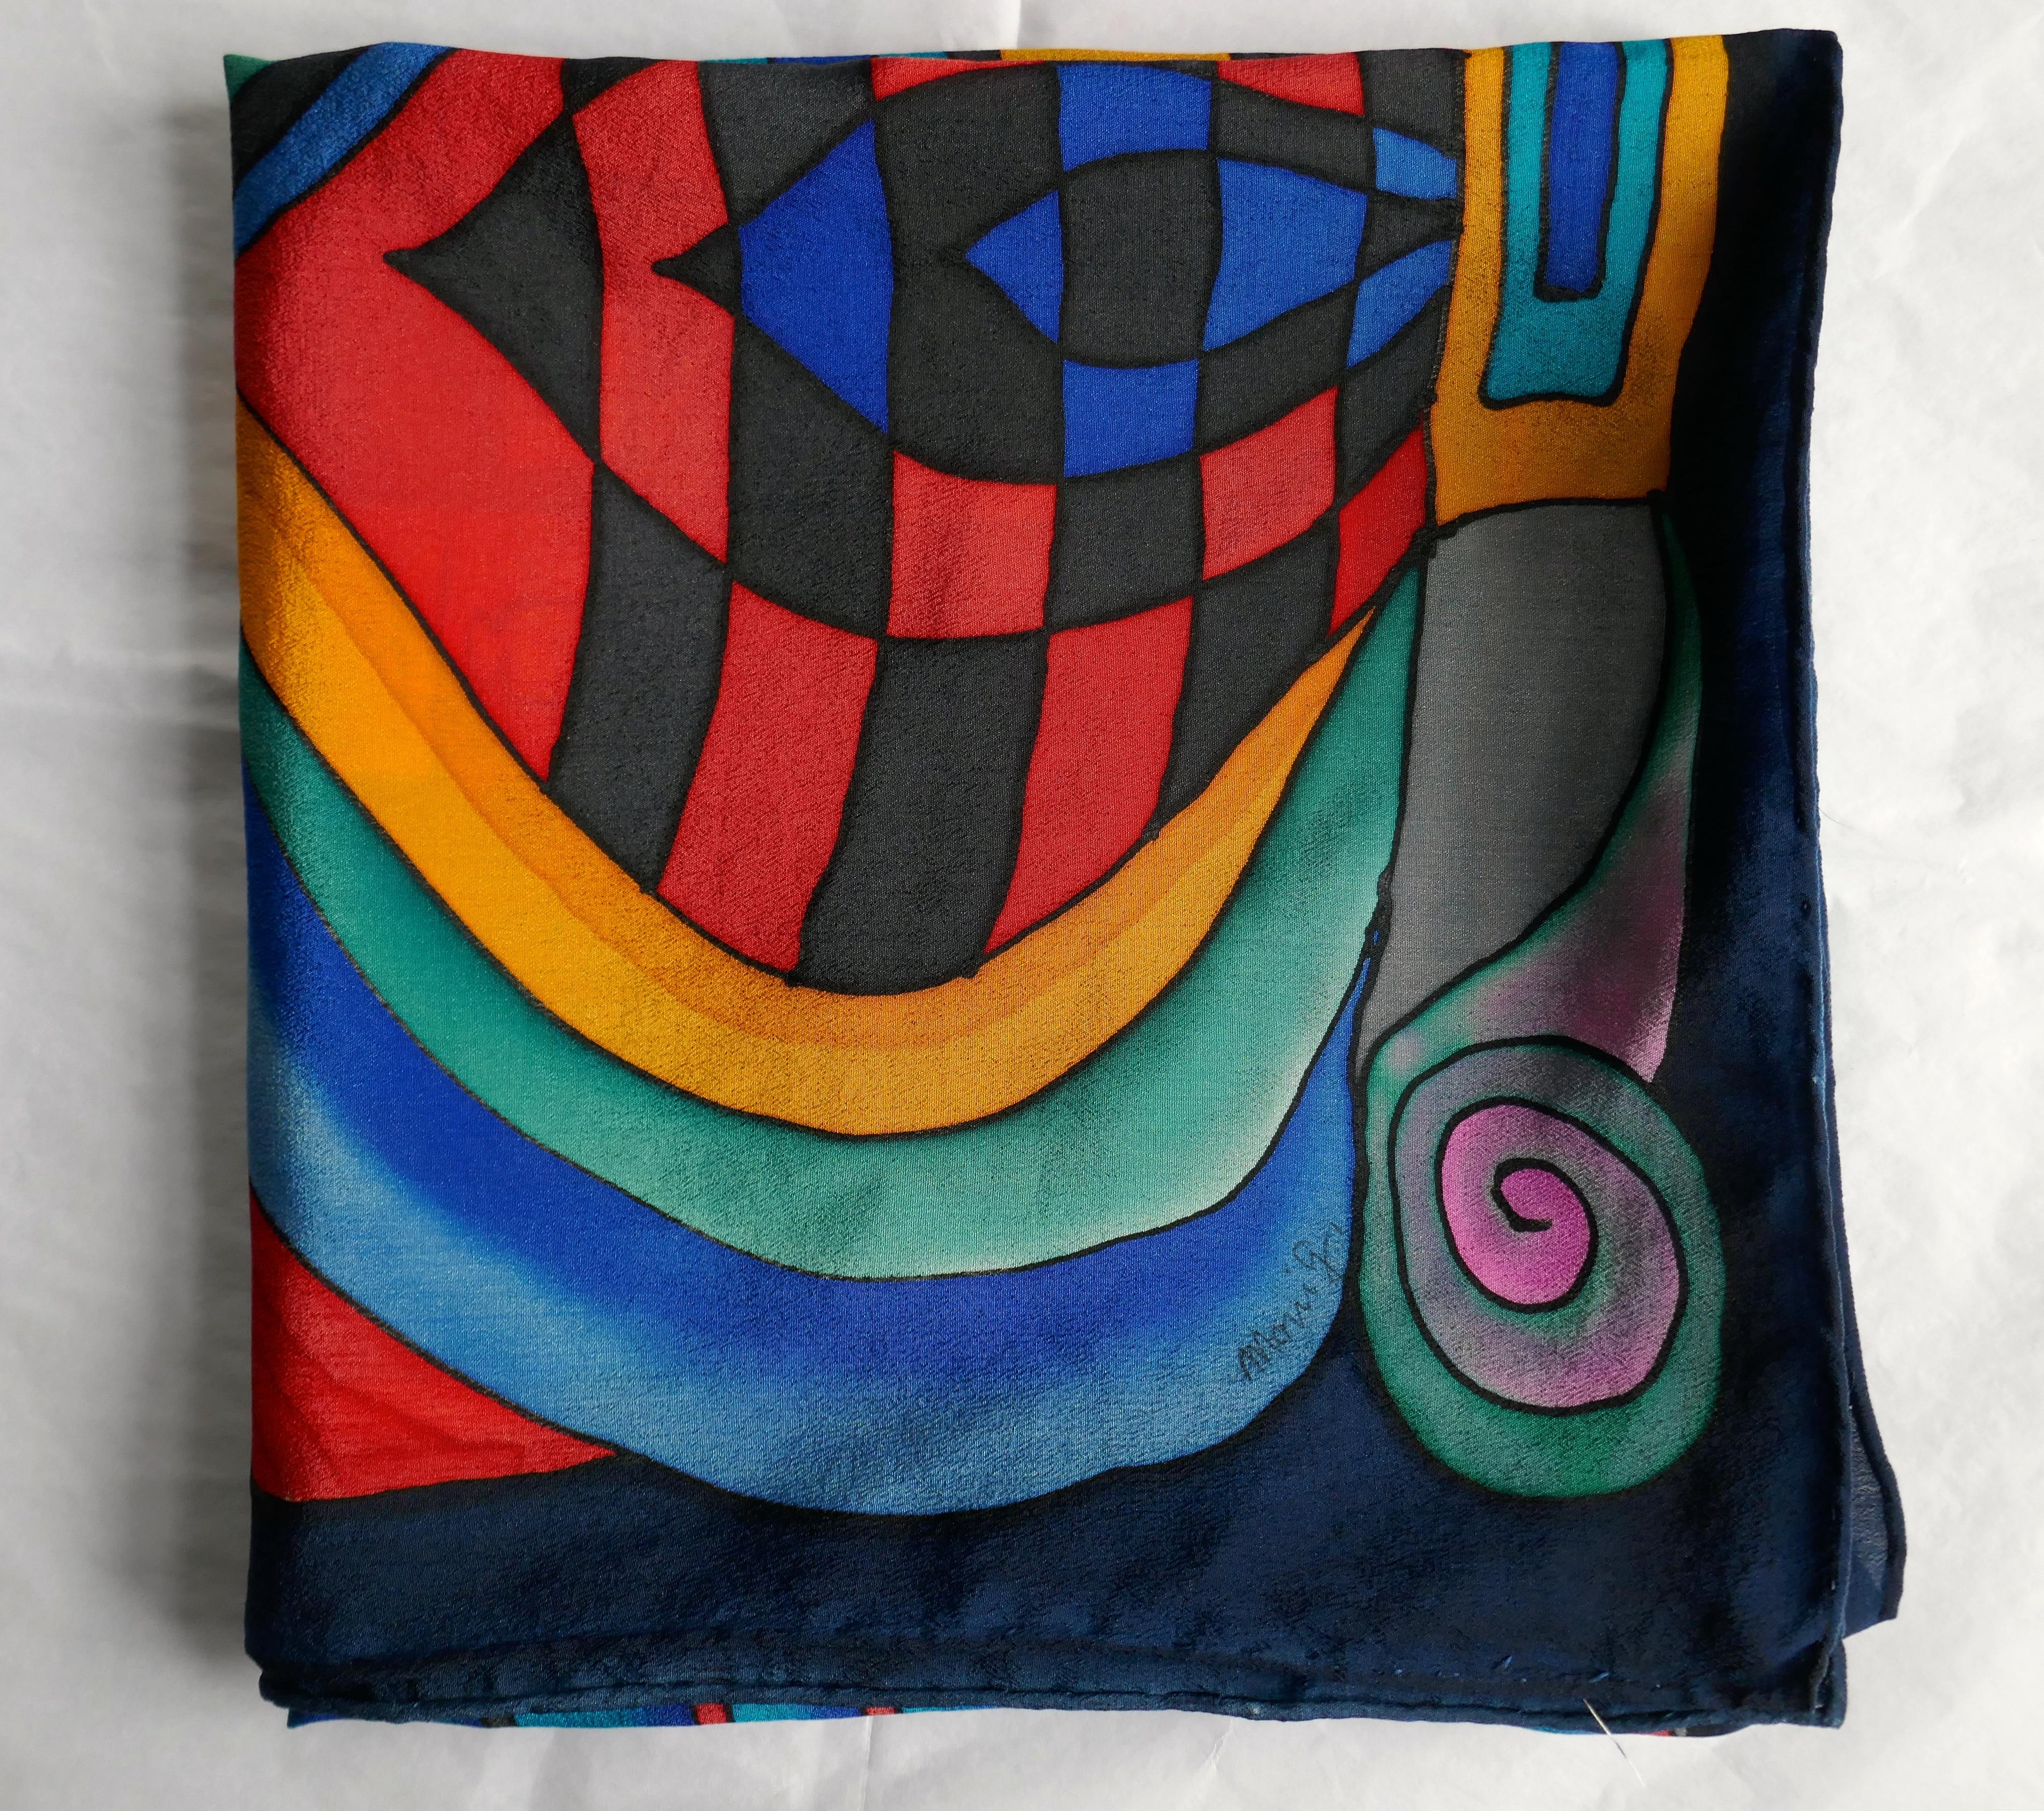 1960s Ideen Vintage Retro Silk Scarf, Psychedelic Vibrant Abstract design by Monique

Vibrant, un classique de son temps
100% soie 
Crêpe de Chine en soie
Mesure 34 